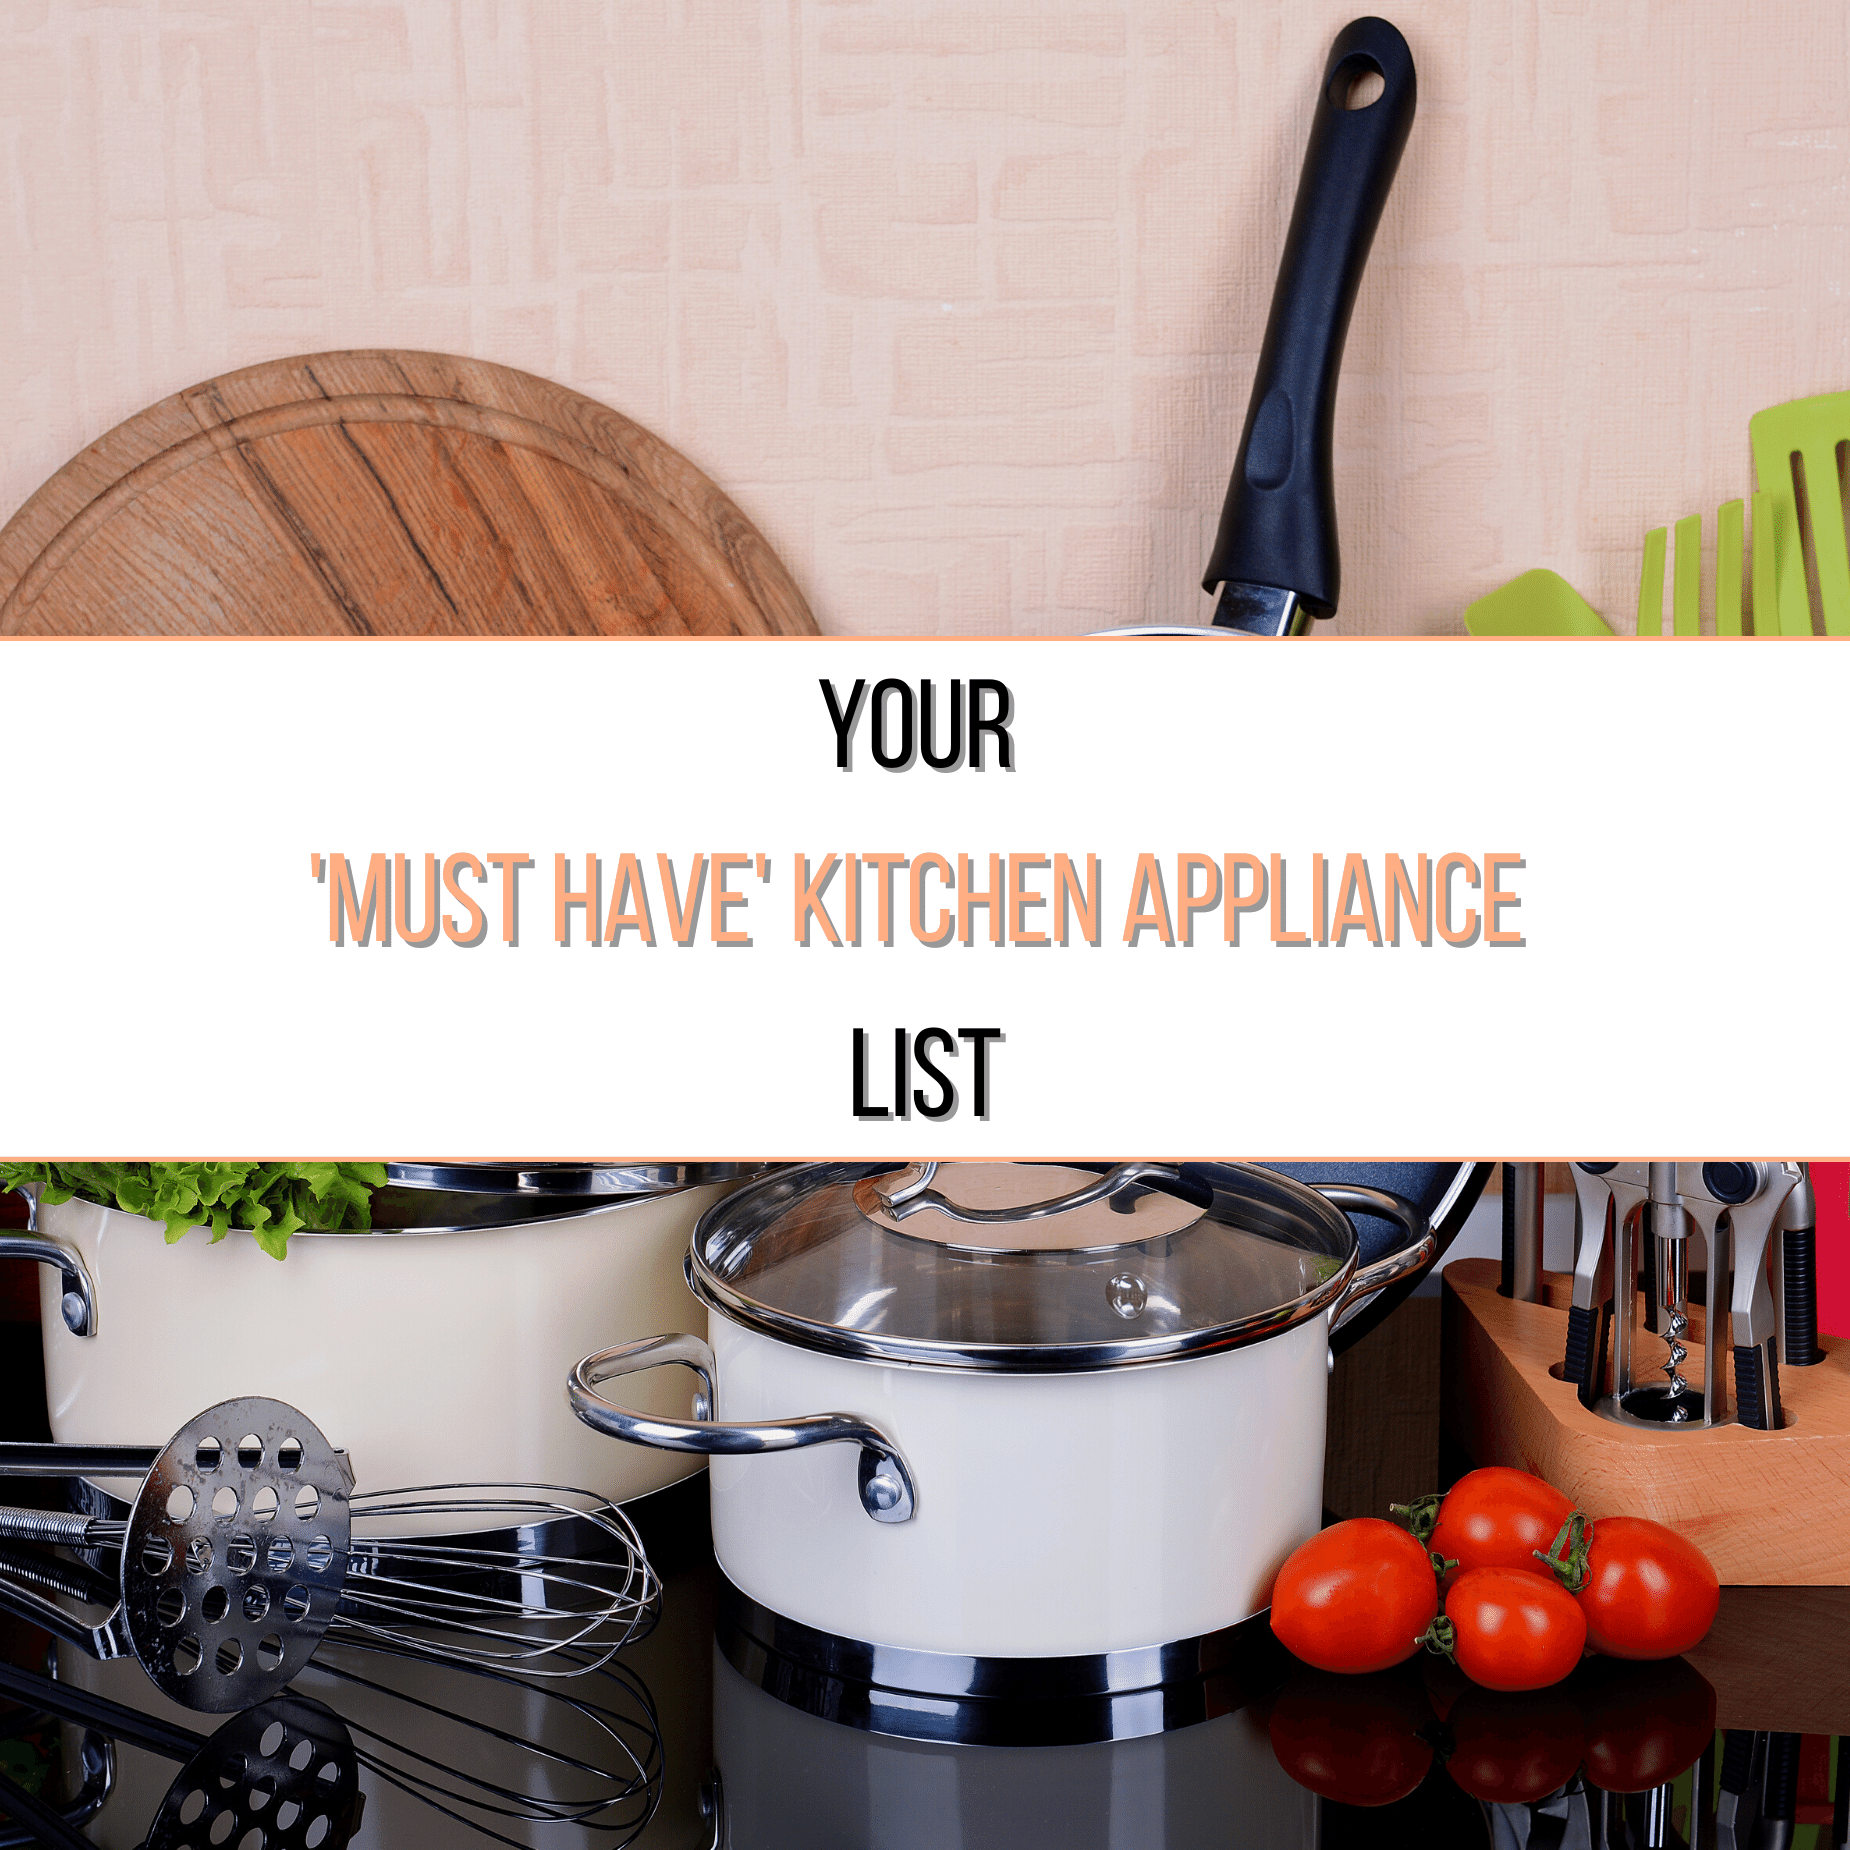 5 Small Helpful Kitchen Appliances